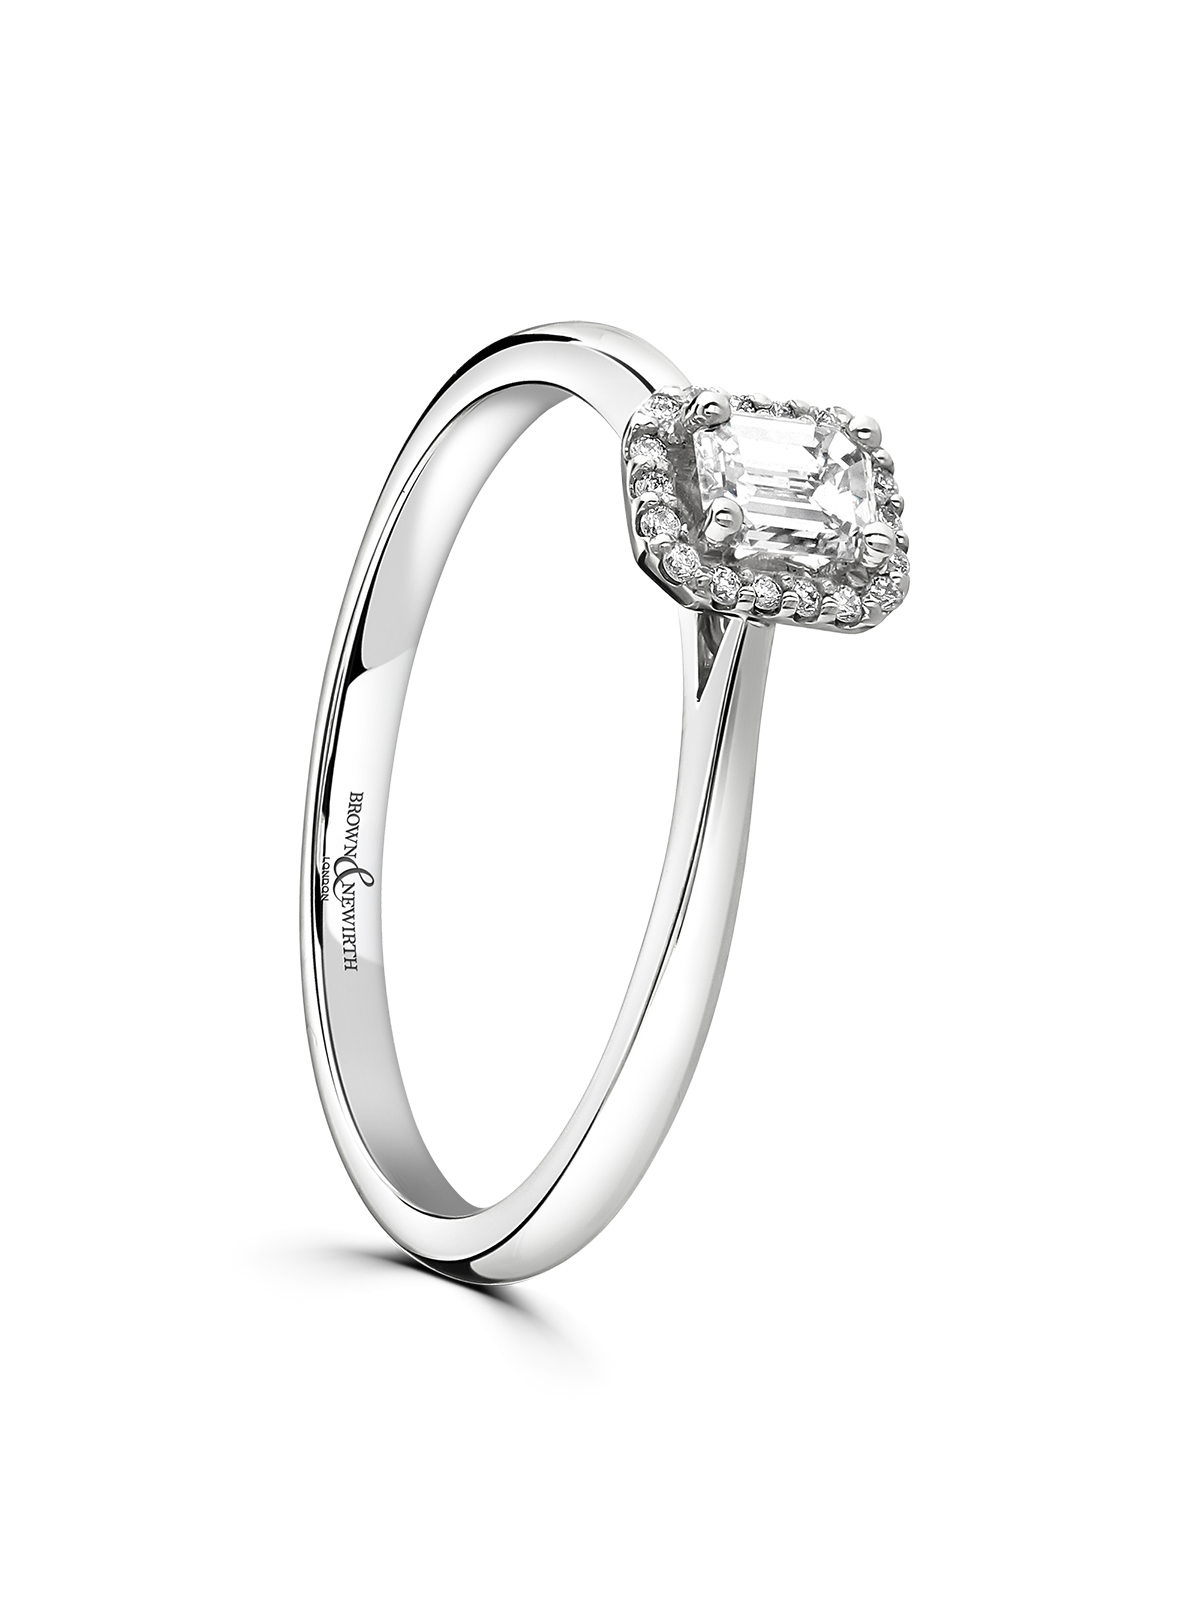 Brown & Newirth Portia 0.25ct Diamond Halo Engagement Ring in Platinum